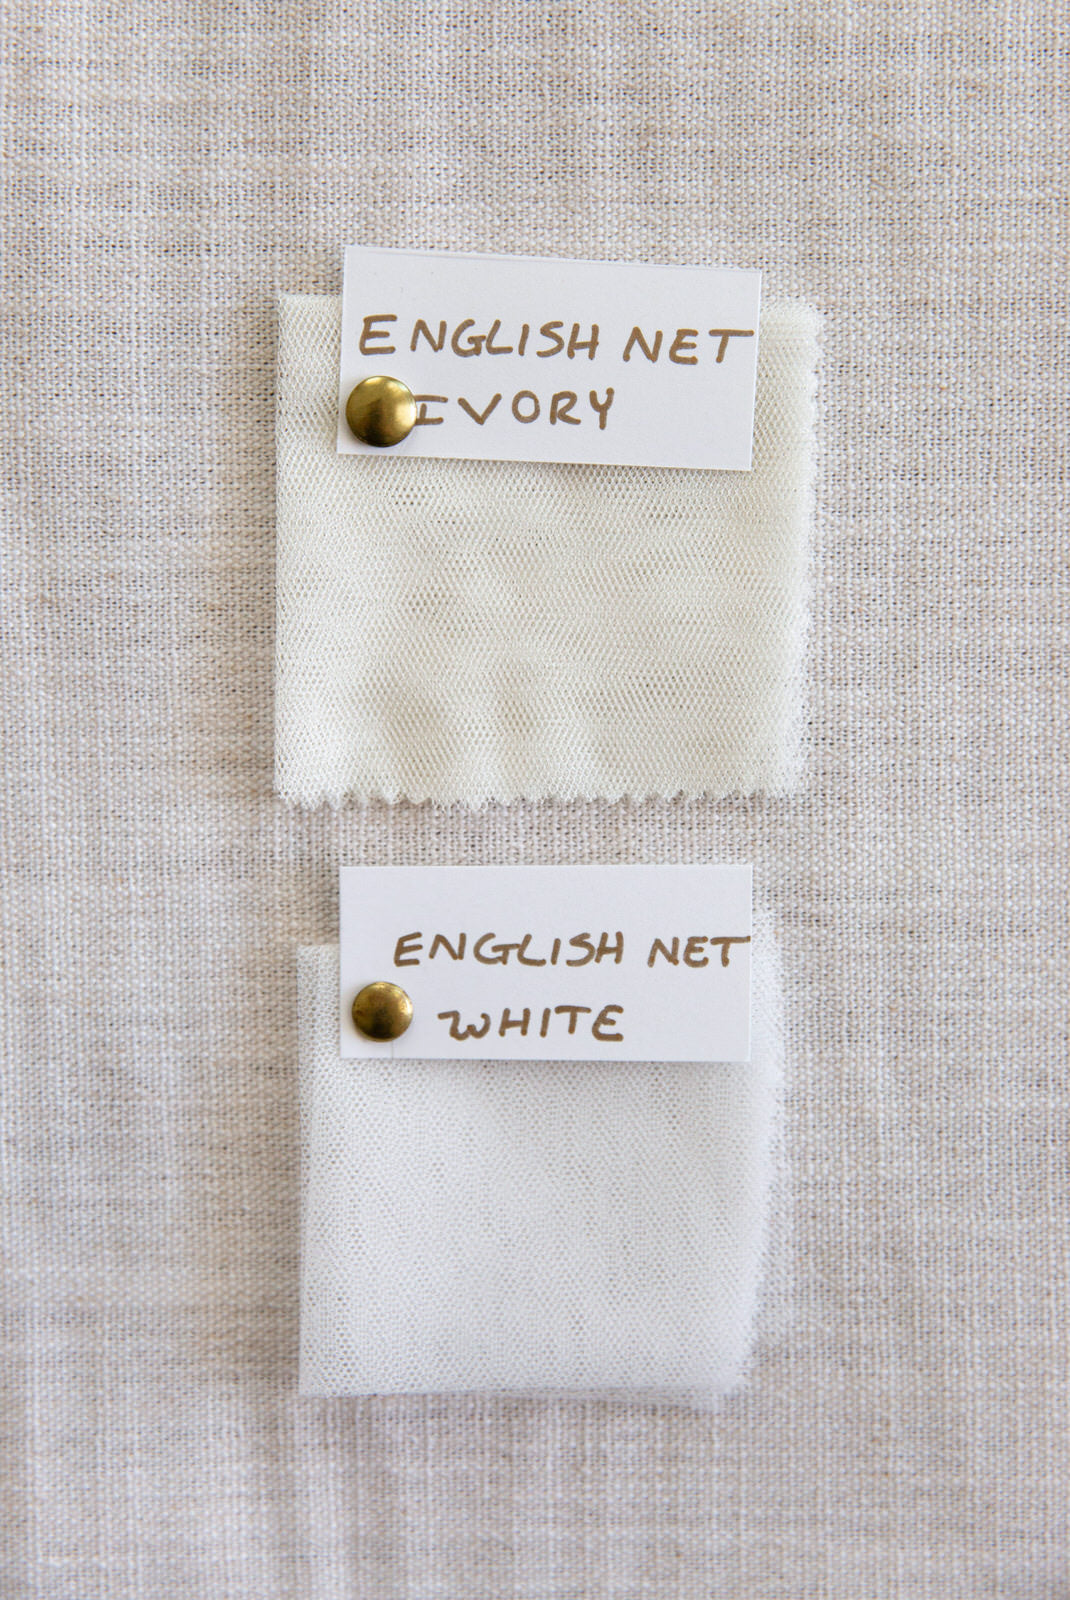 white and soft white English net bridal veil fabric